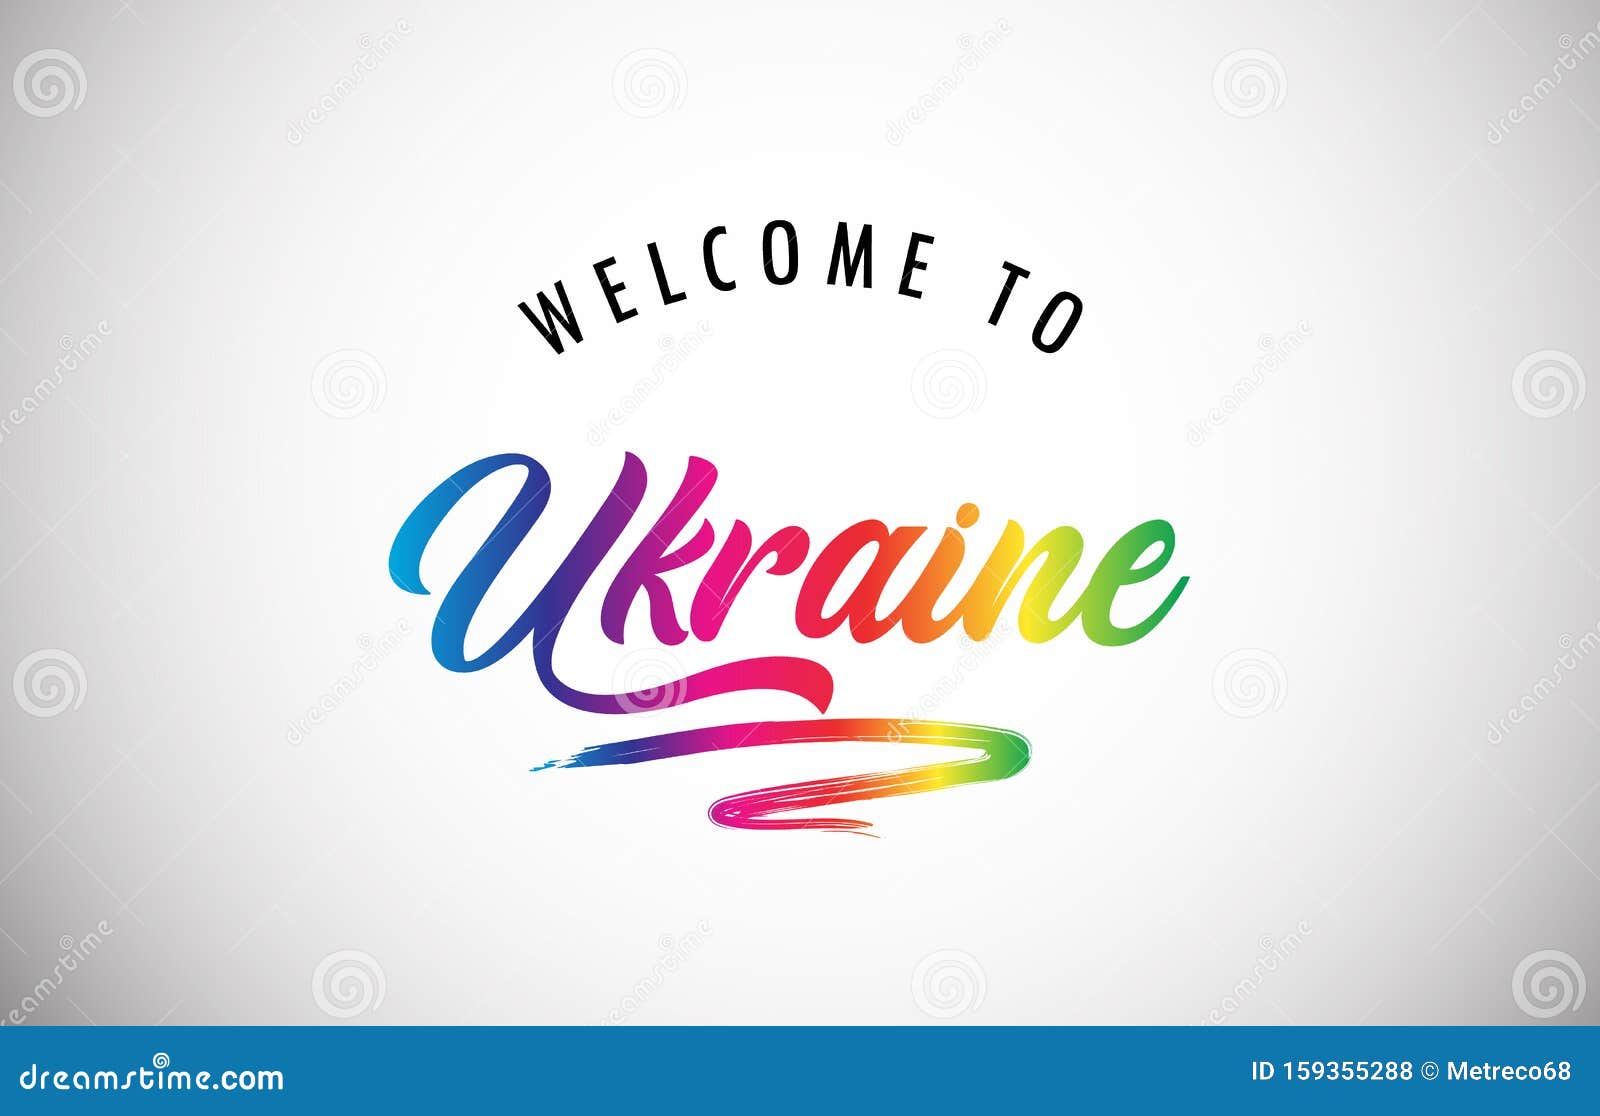 welcome to ukraine presentation